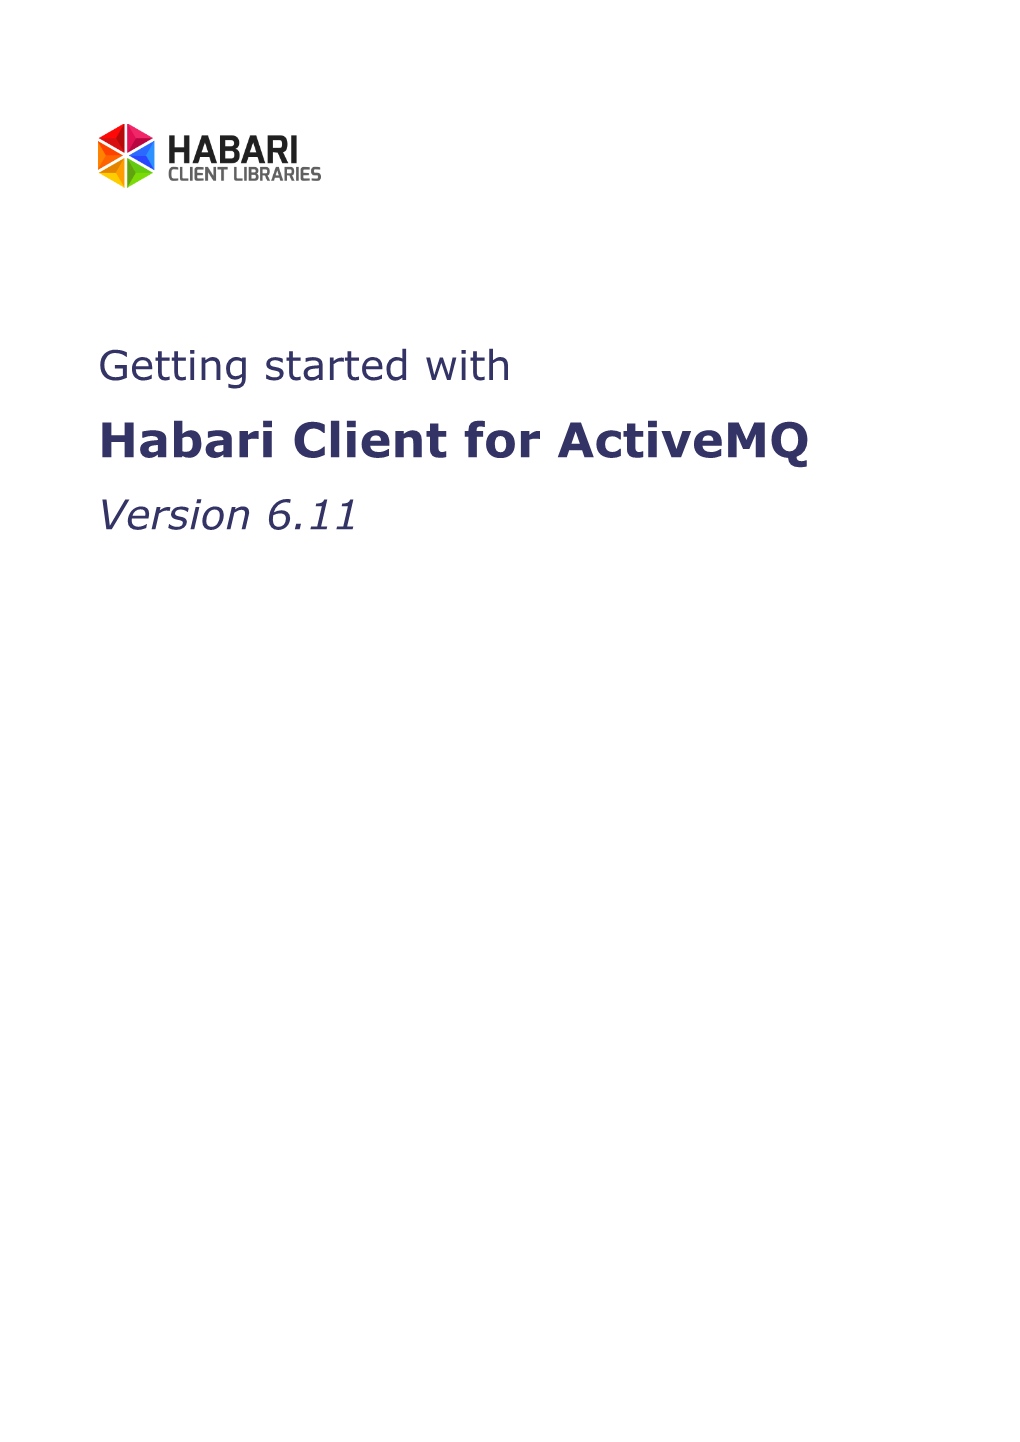 Habari Client for Activemq Version 6.11 2 Habari Client for Activemq 6.11